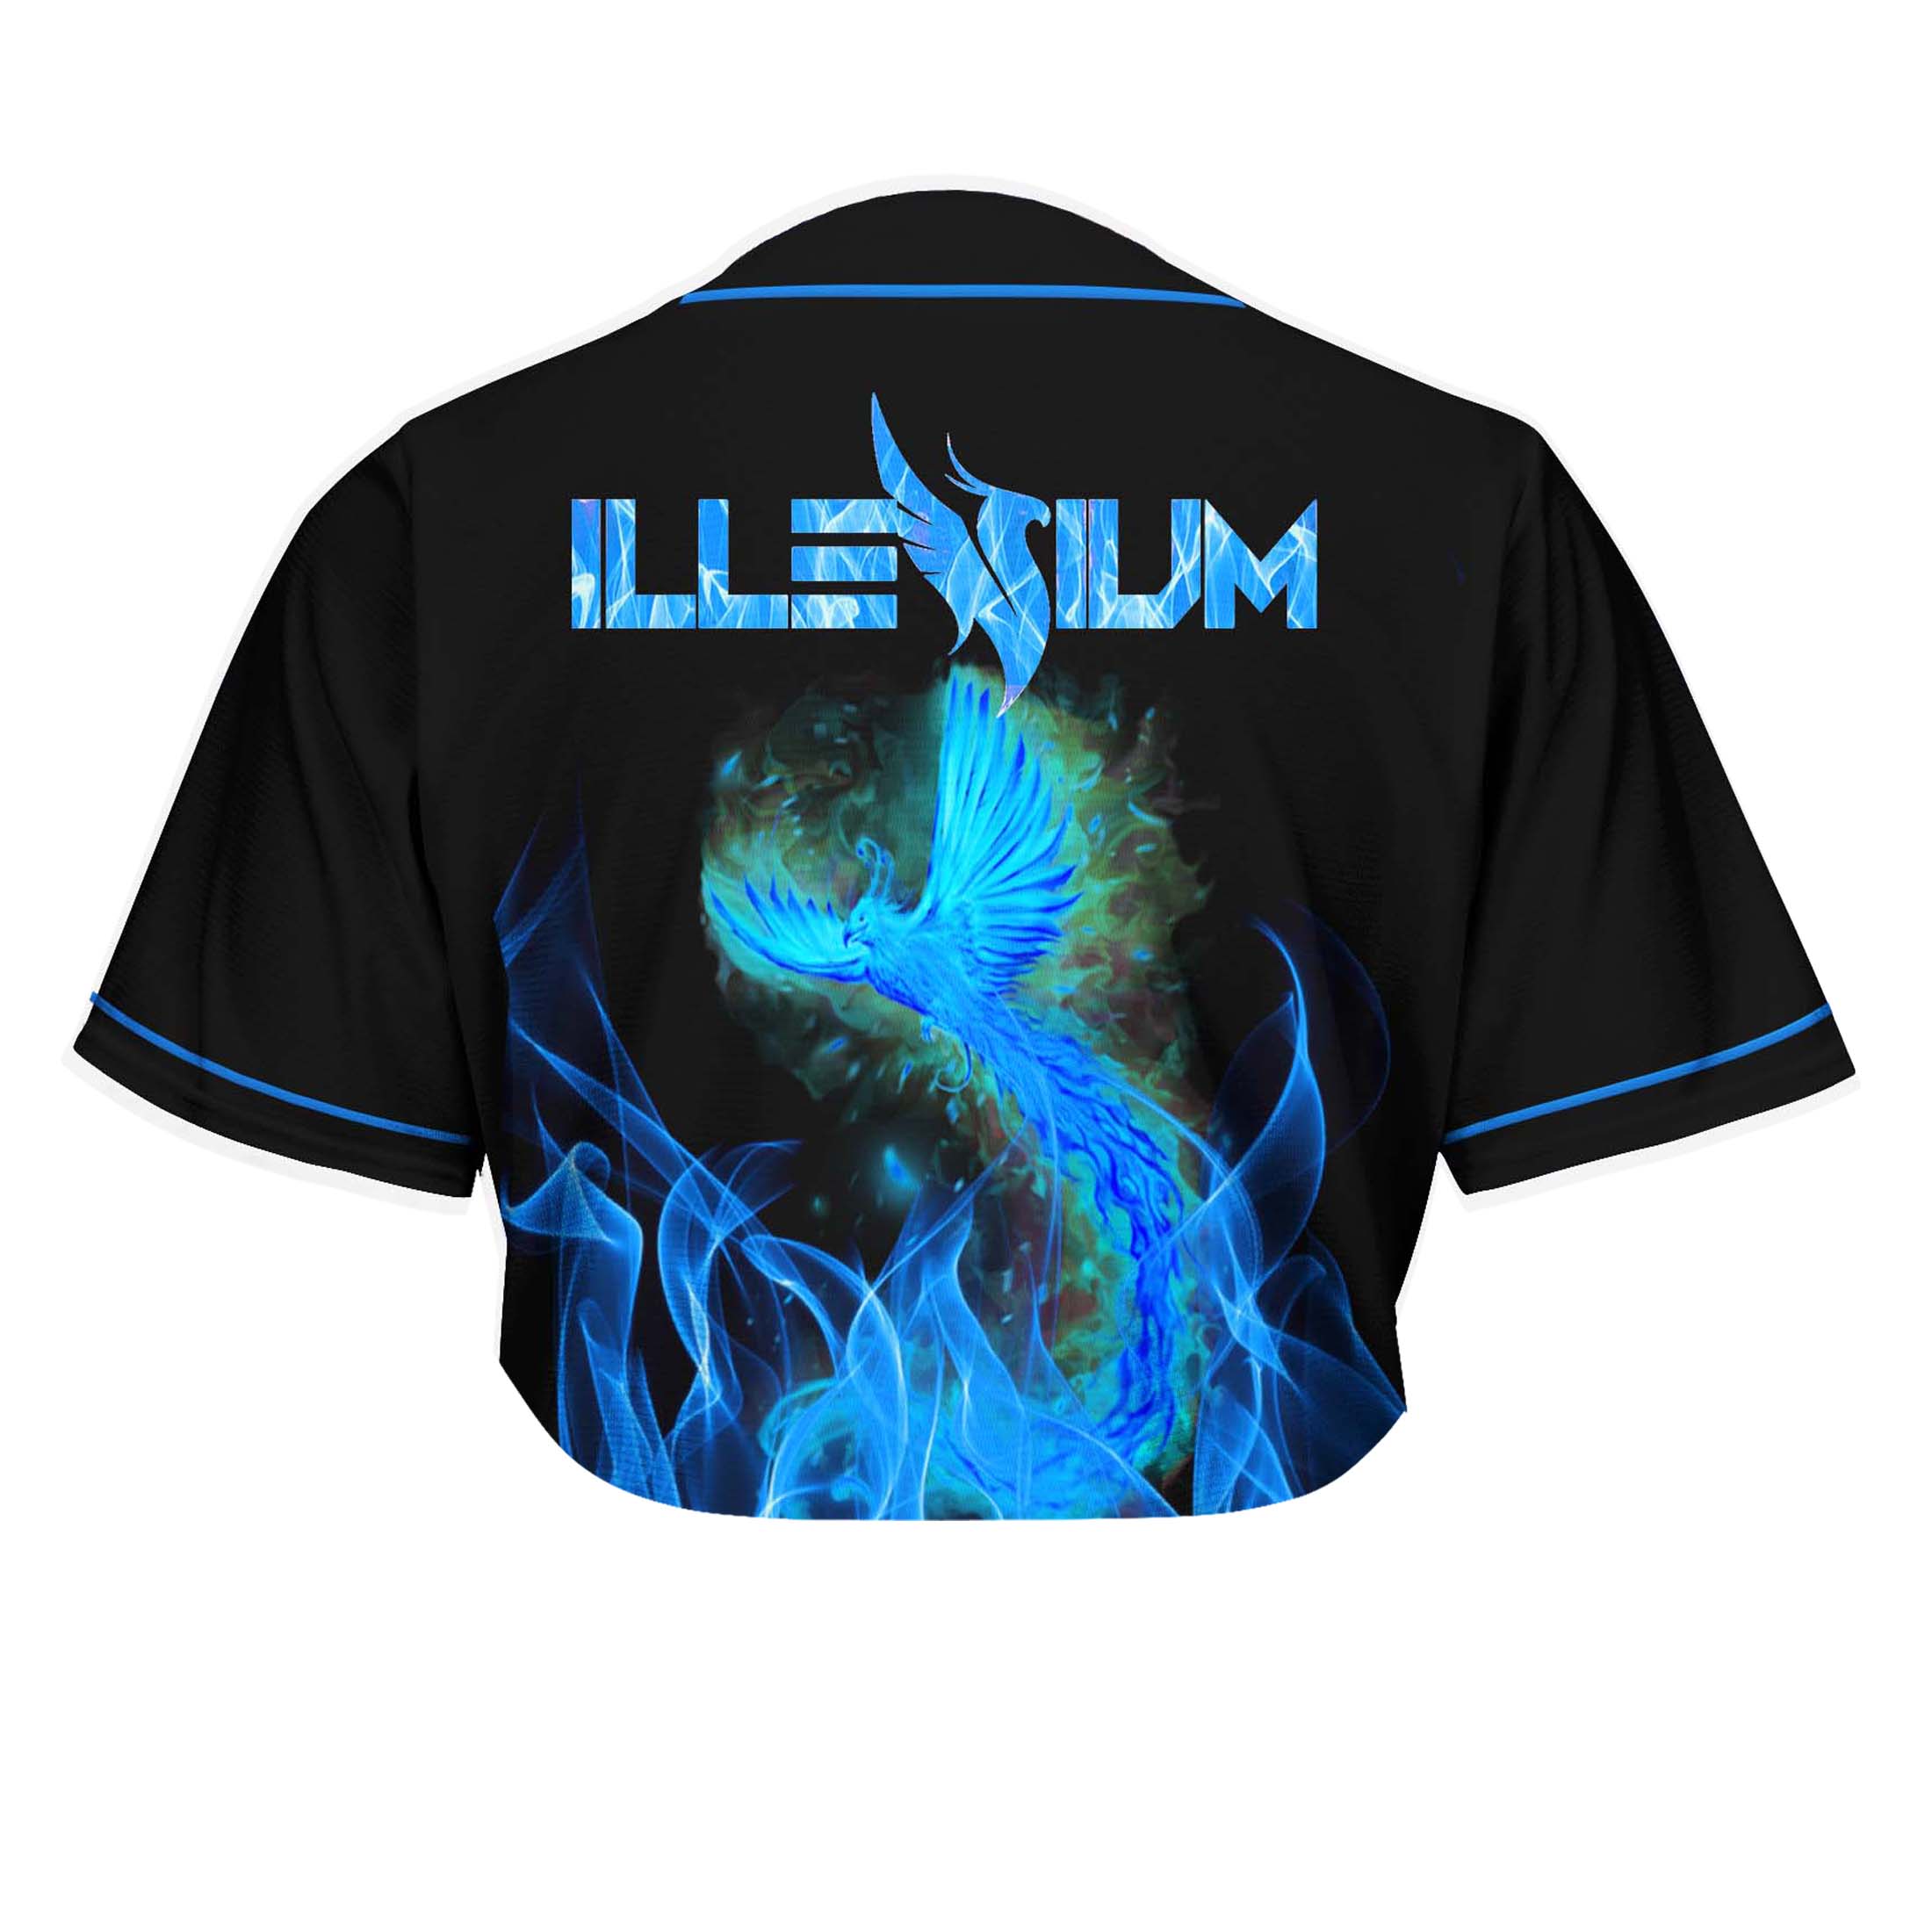 Illenium fire rave jersey